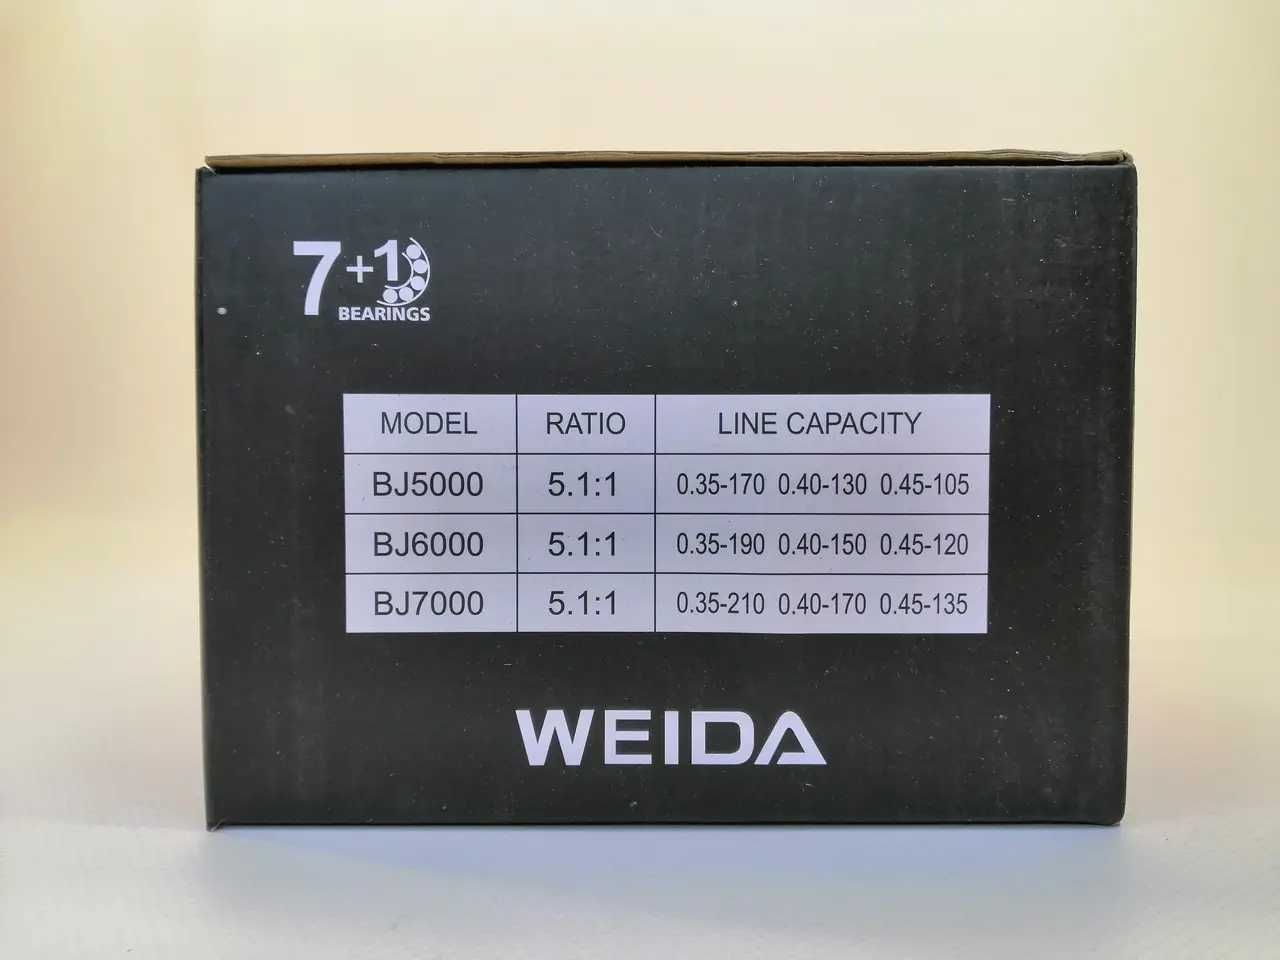 Катушка карповая Weida BJ 5000/6000/7000 с байтраннером 7+1bb